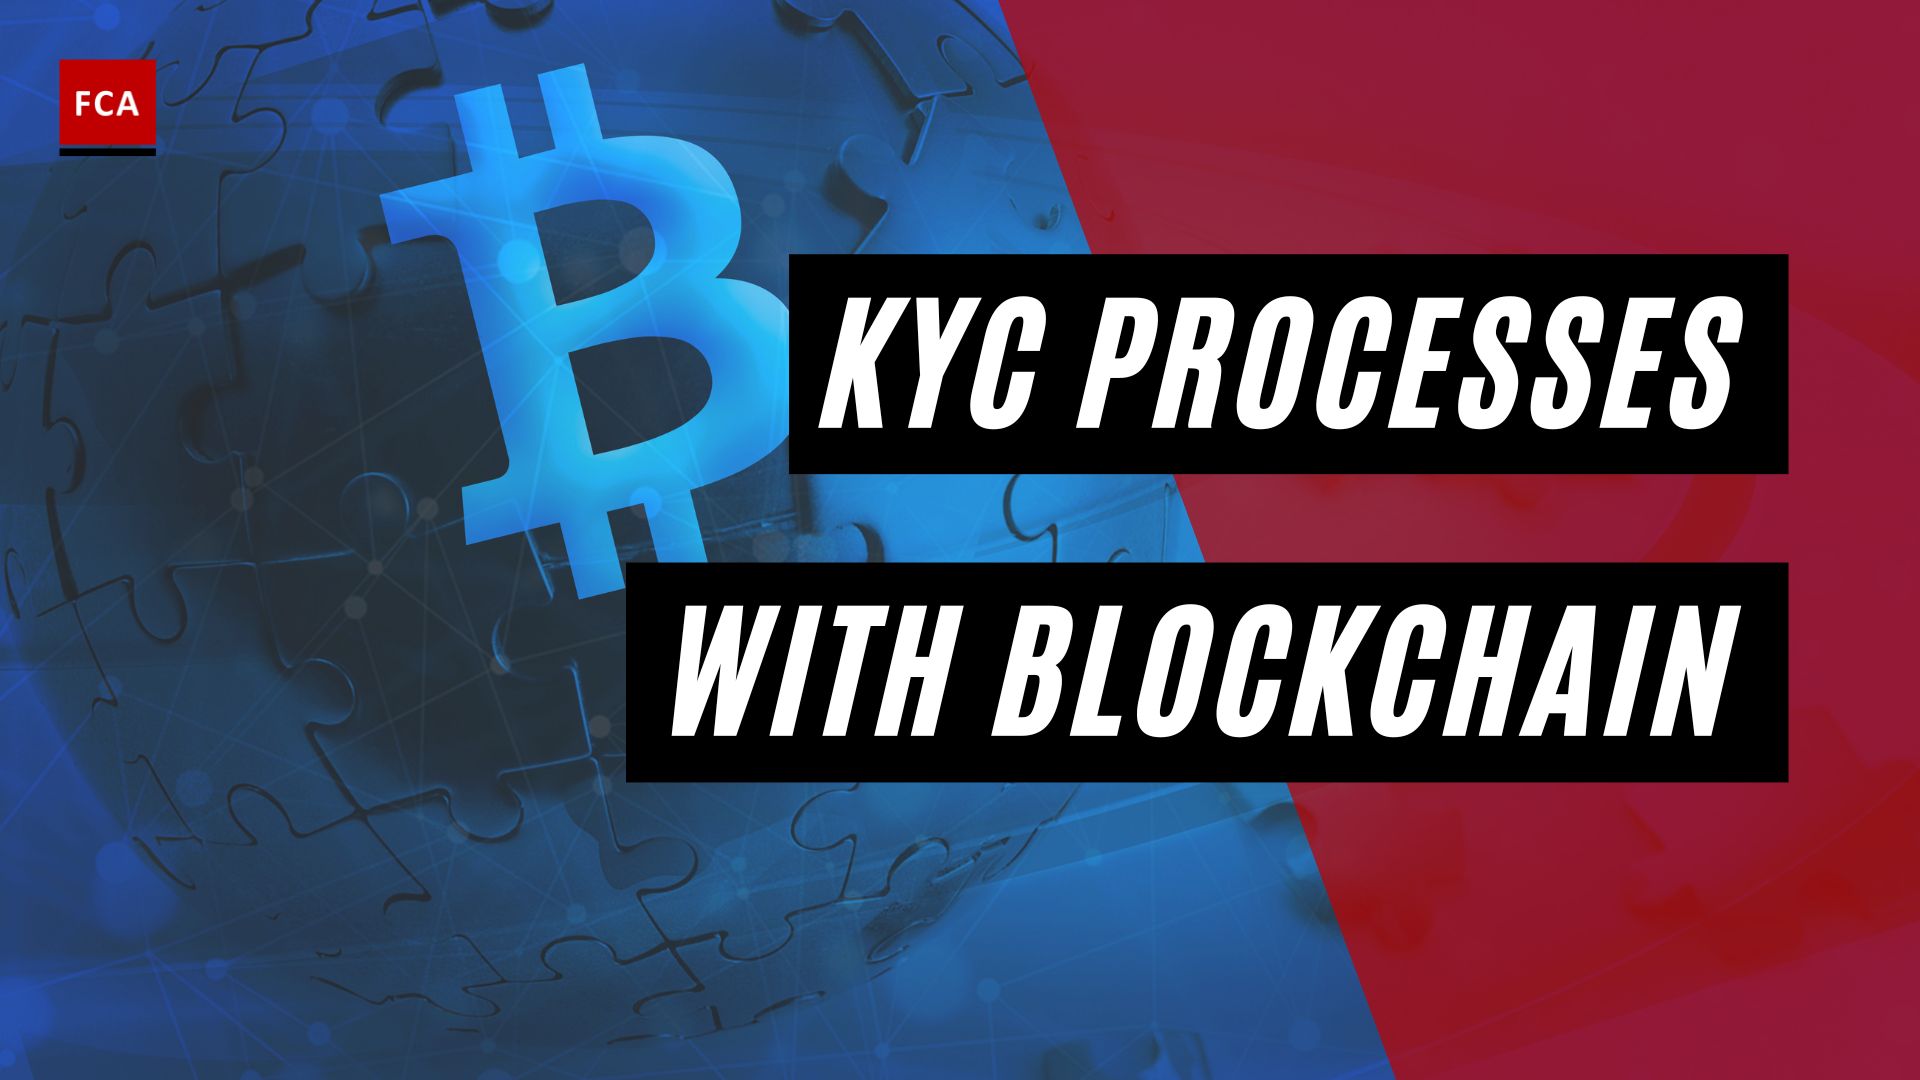 Kyc Processes With Blockchain